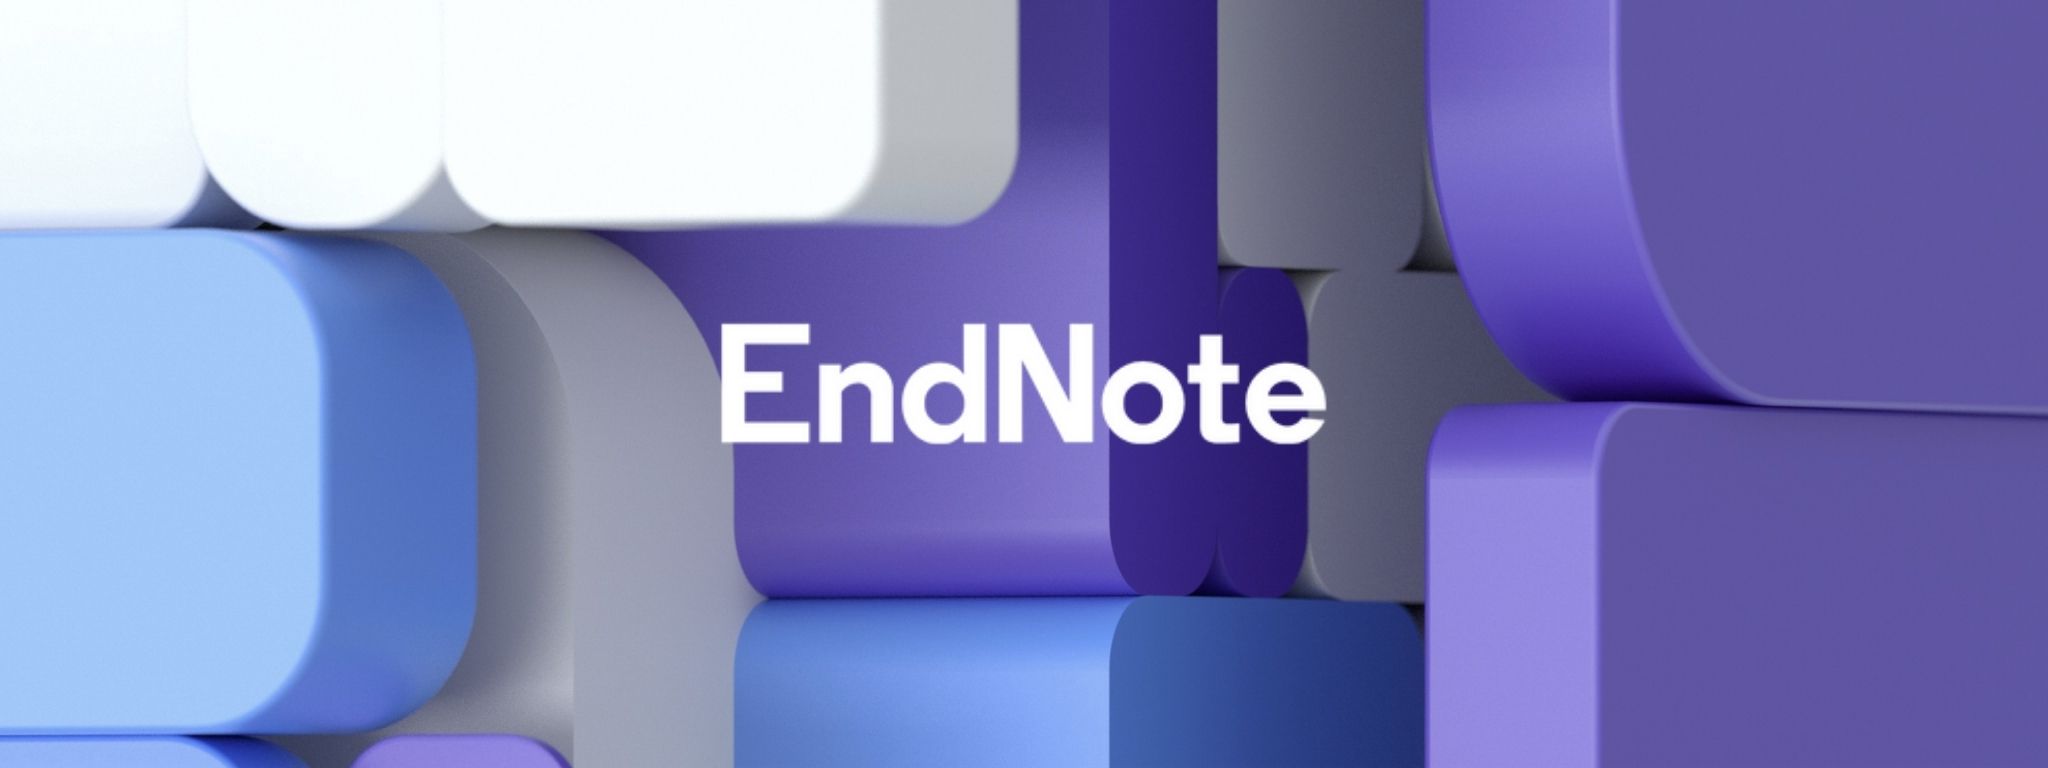 endnote free version